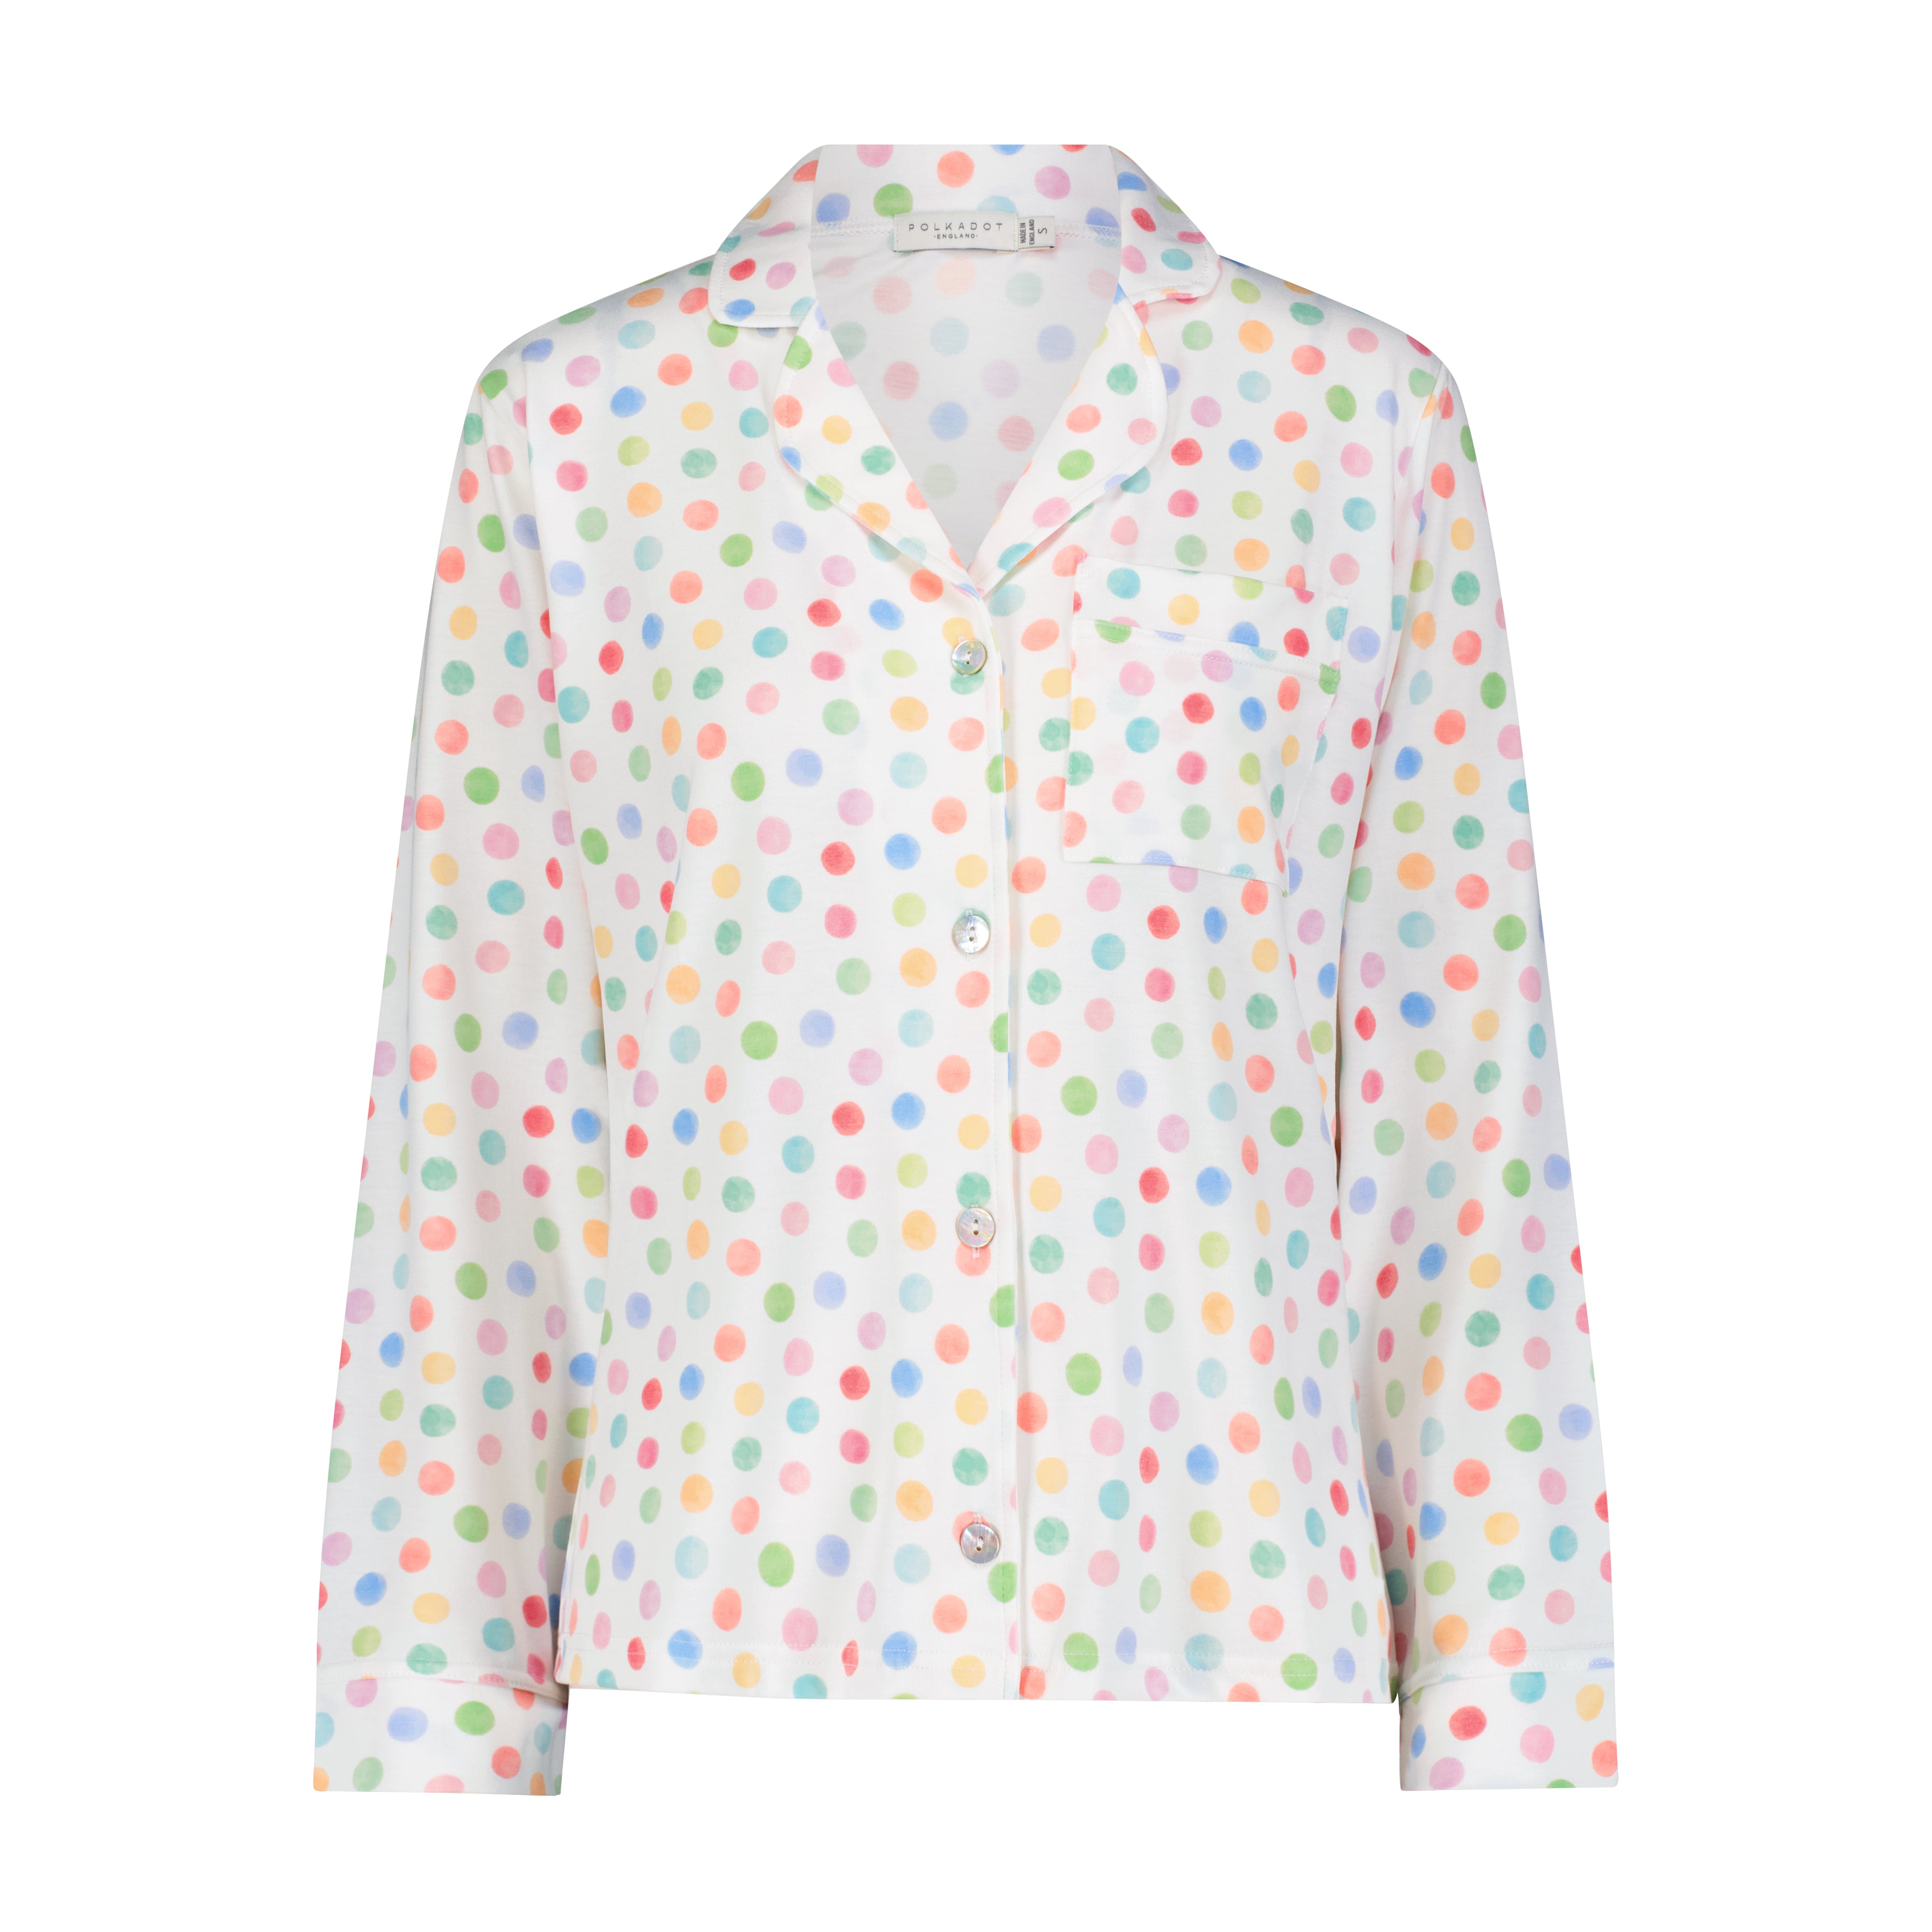 CHARLEY Pajama Set in Dot Watercolor Print